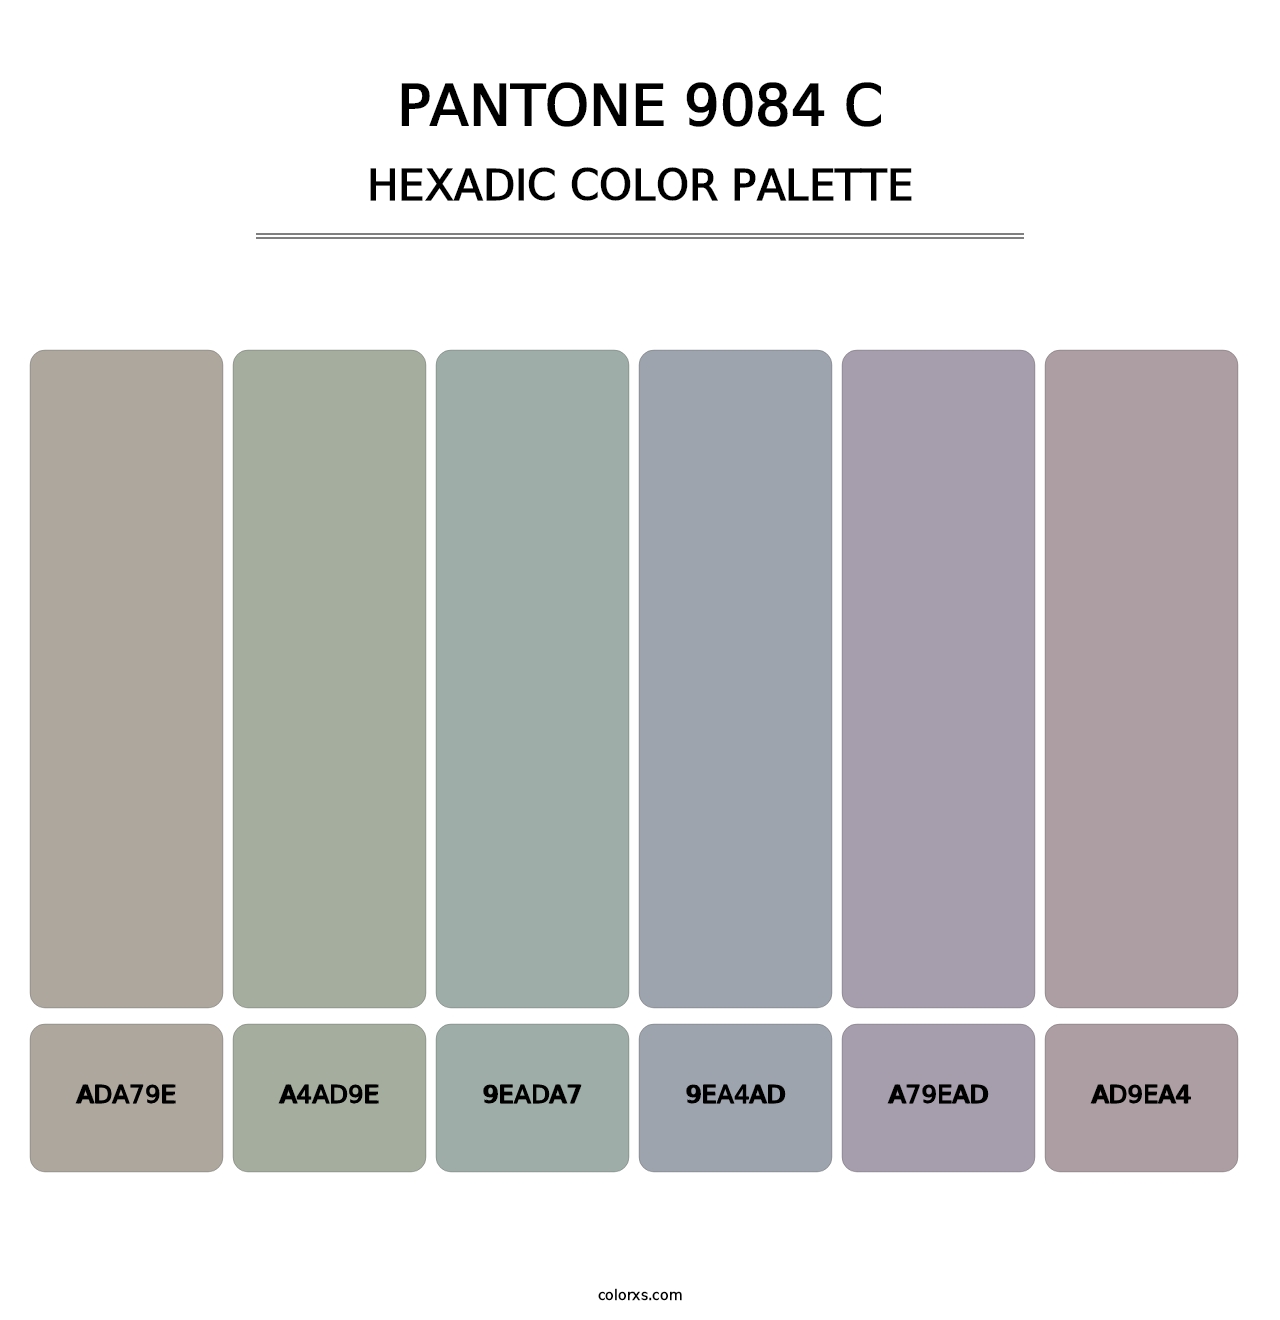 PANTONE 9084 C - Hexadic Color Palette